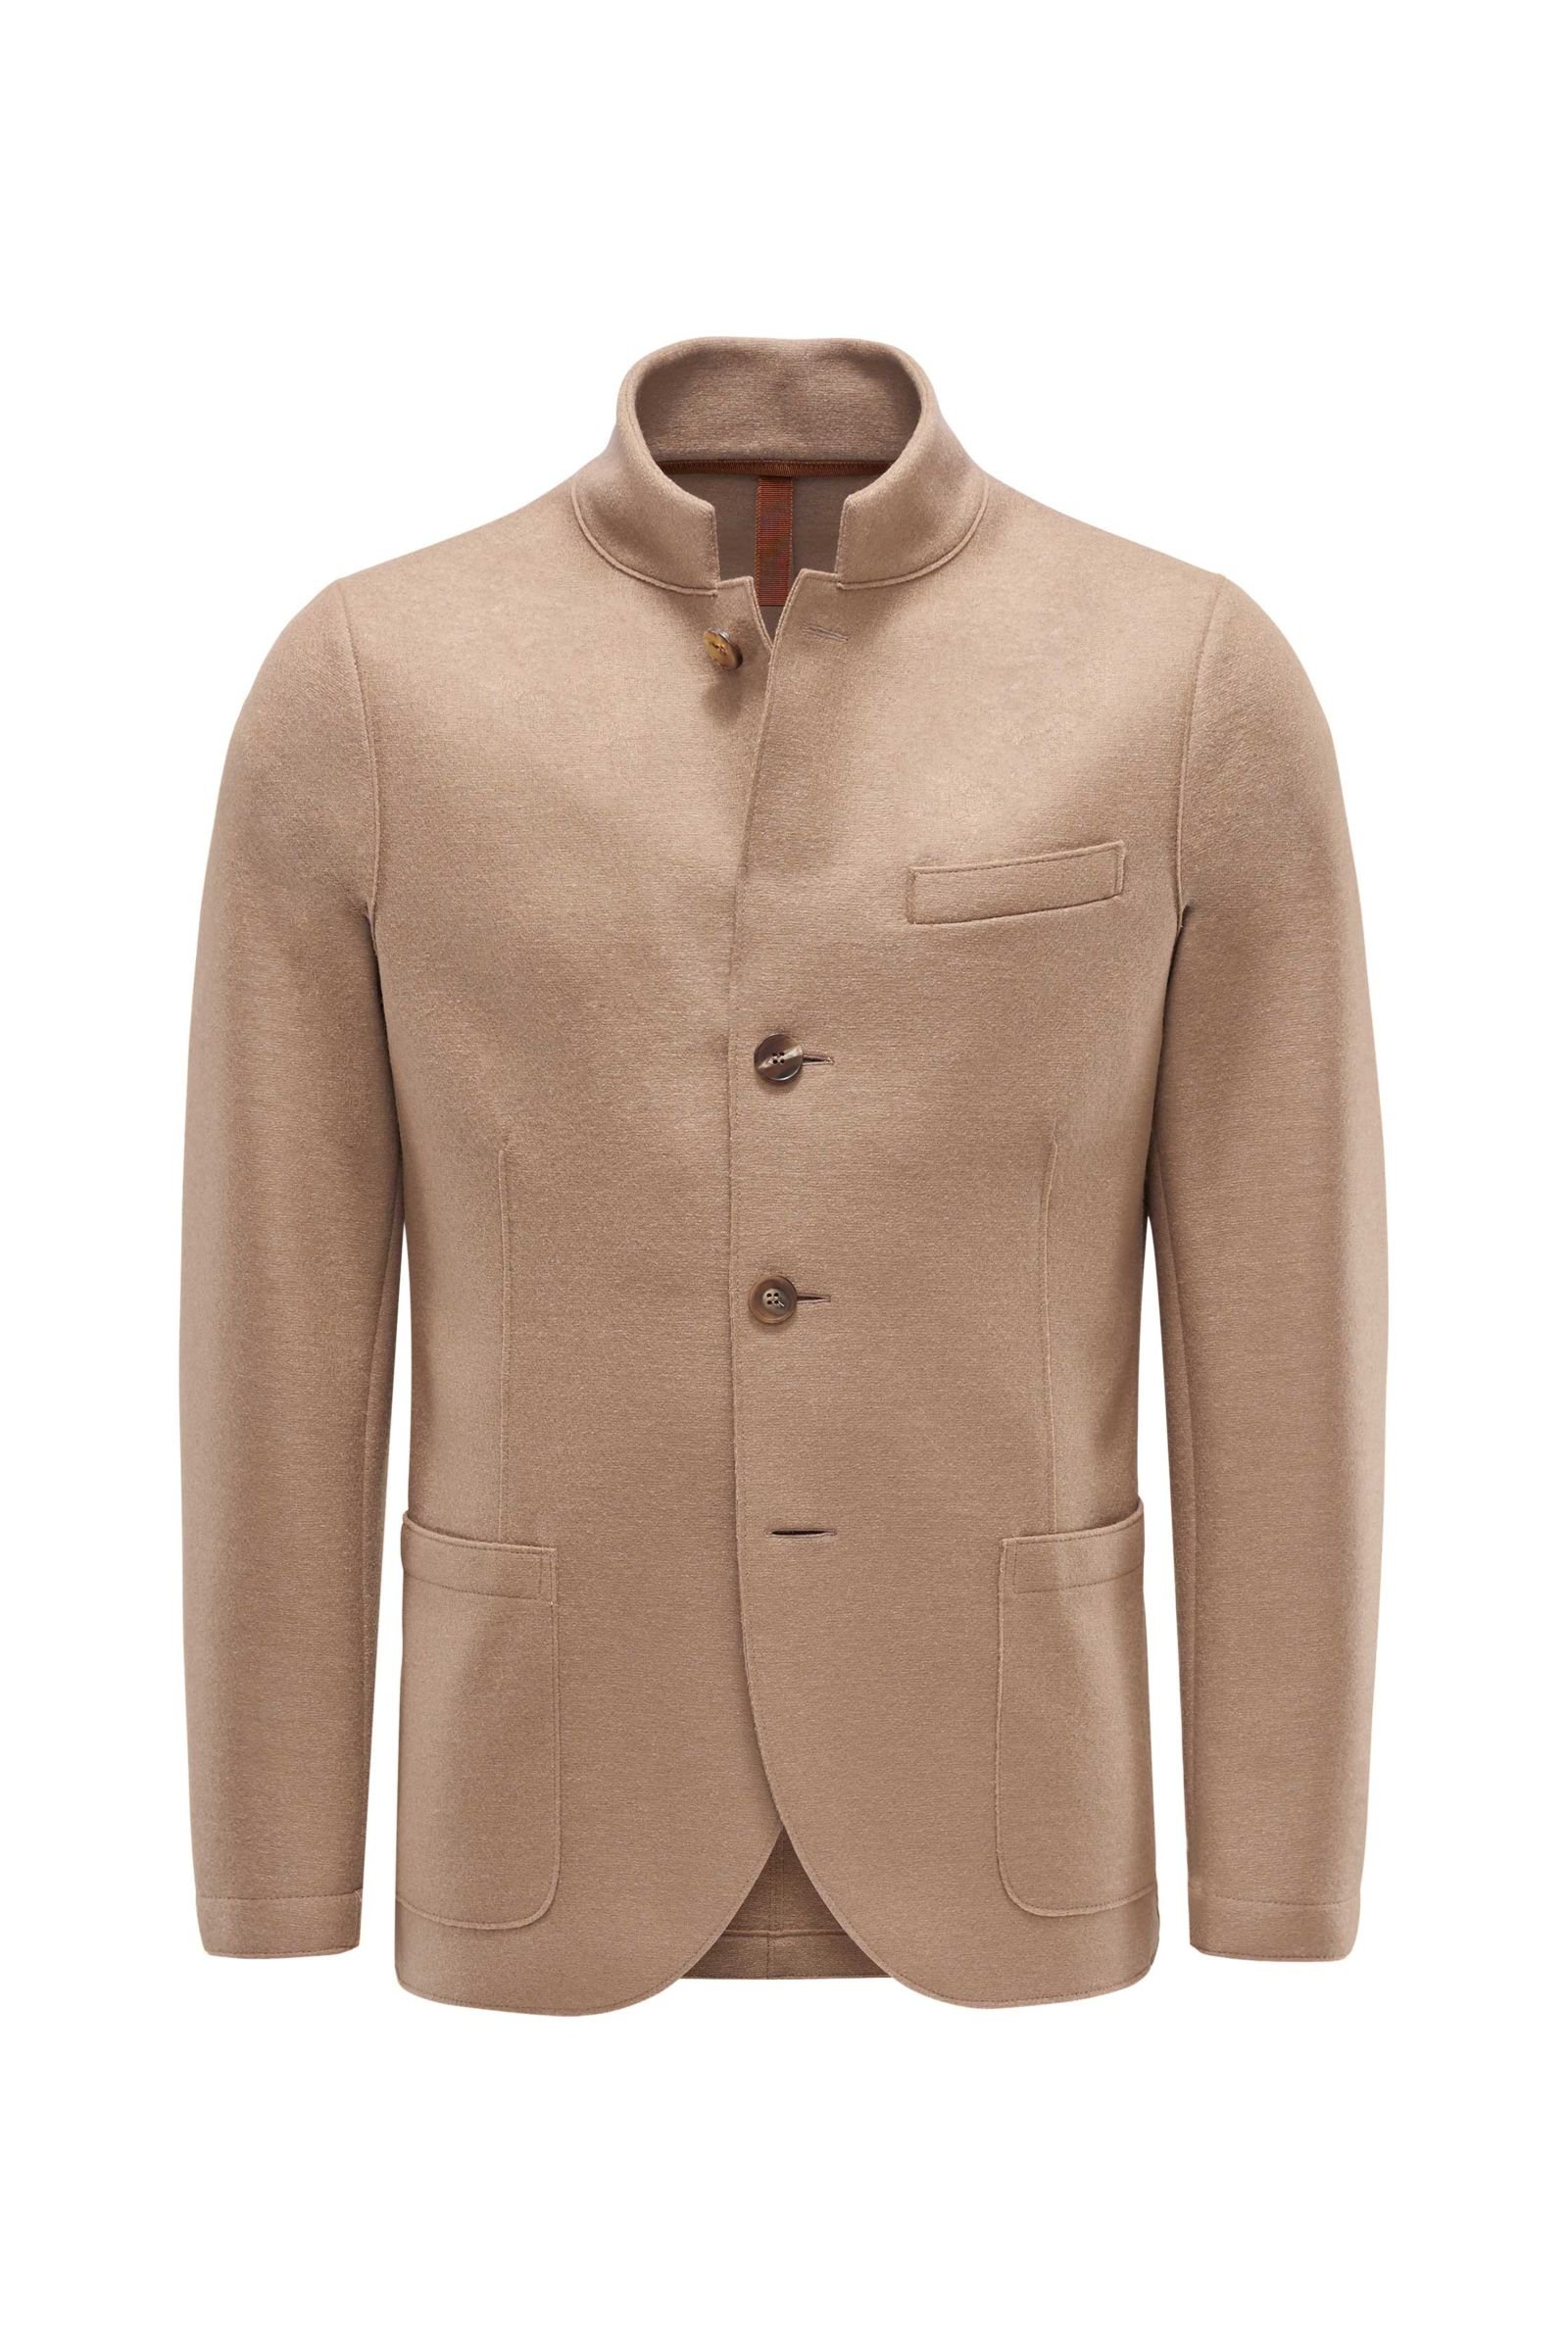 Smart-casual jacket light brown